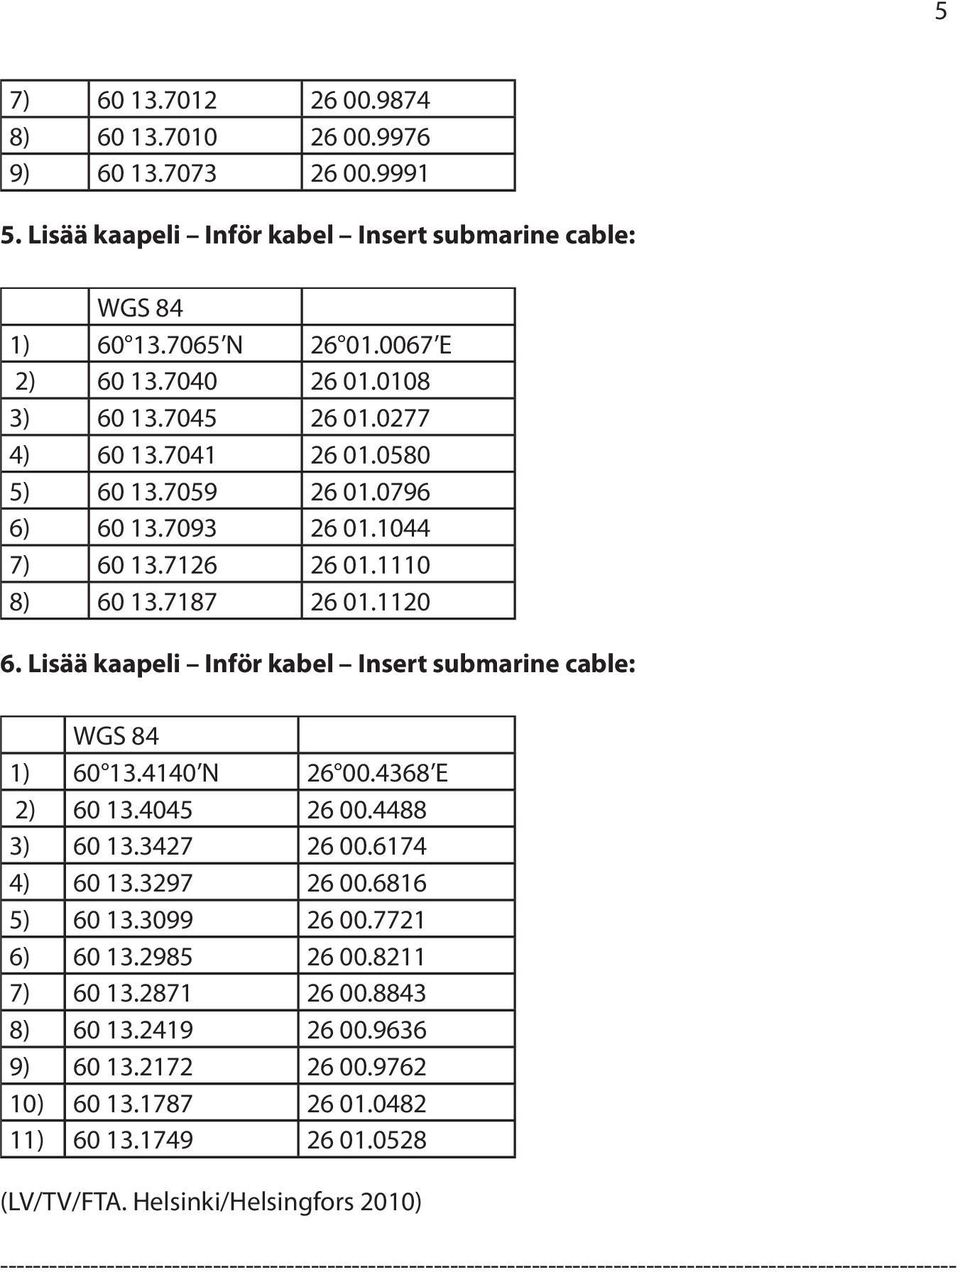 Lisää kaapeli Inför kabel Insert submarine cable: 1) 60 13.4140 N 26 00.4368 E 2) 60 13.4045 26 00.4488 3) 60 13.3427 26 00.6174 4) 60 13.3297 26 00.6816 5) 60 13.3099 26 00.